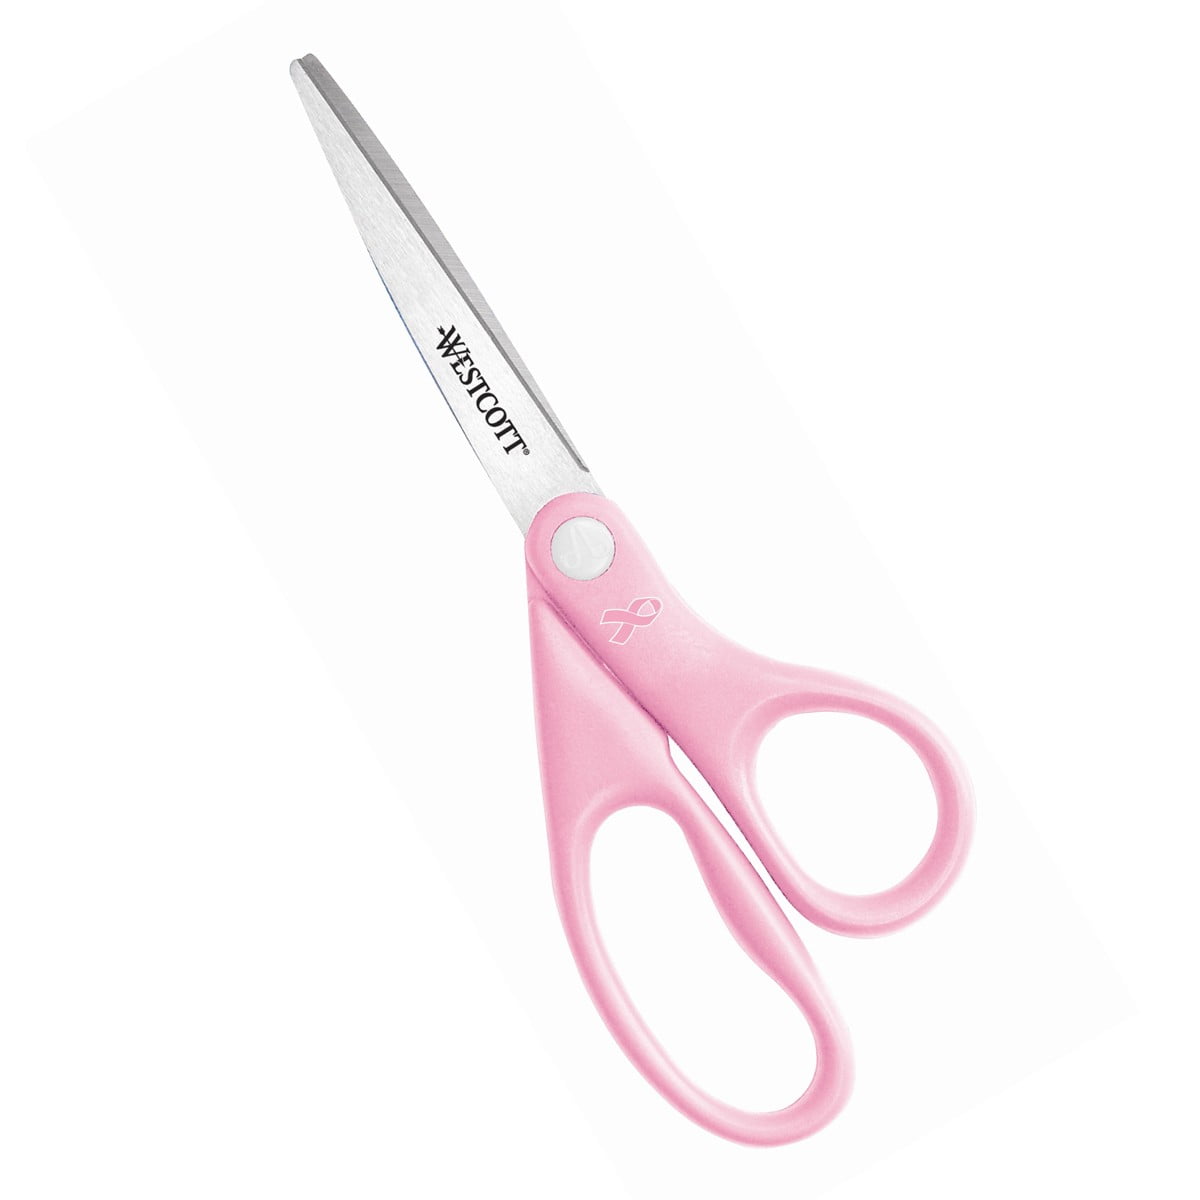 8 True Righty Scissors, Satin Polish with Pink Handle